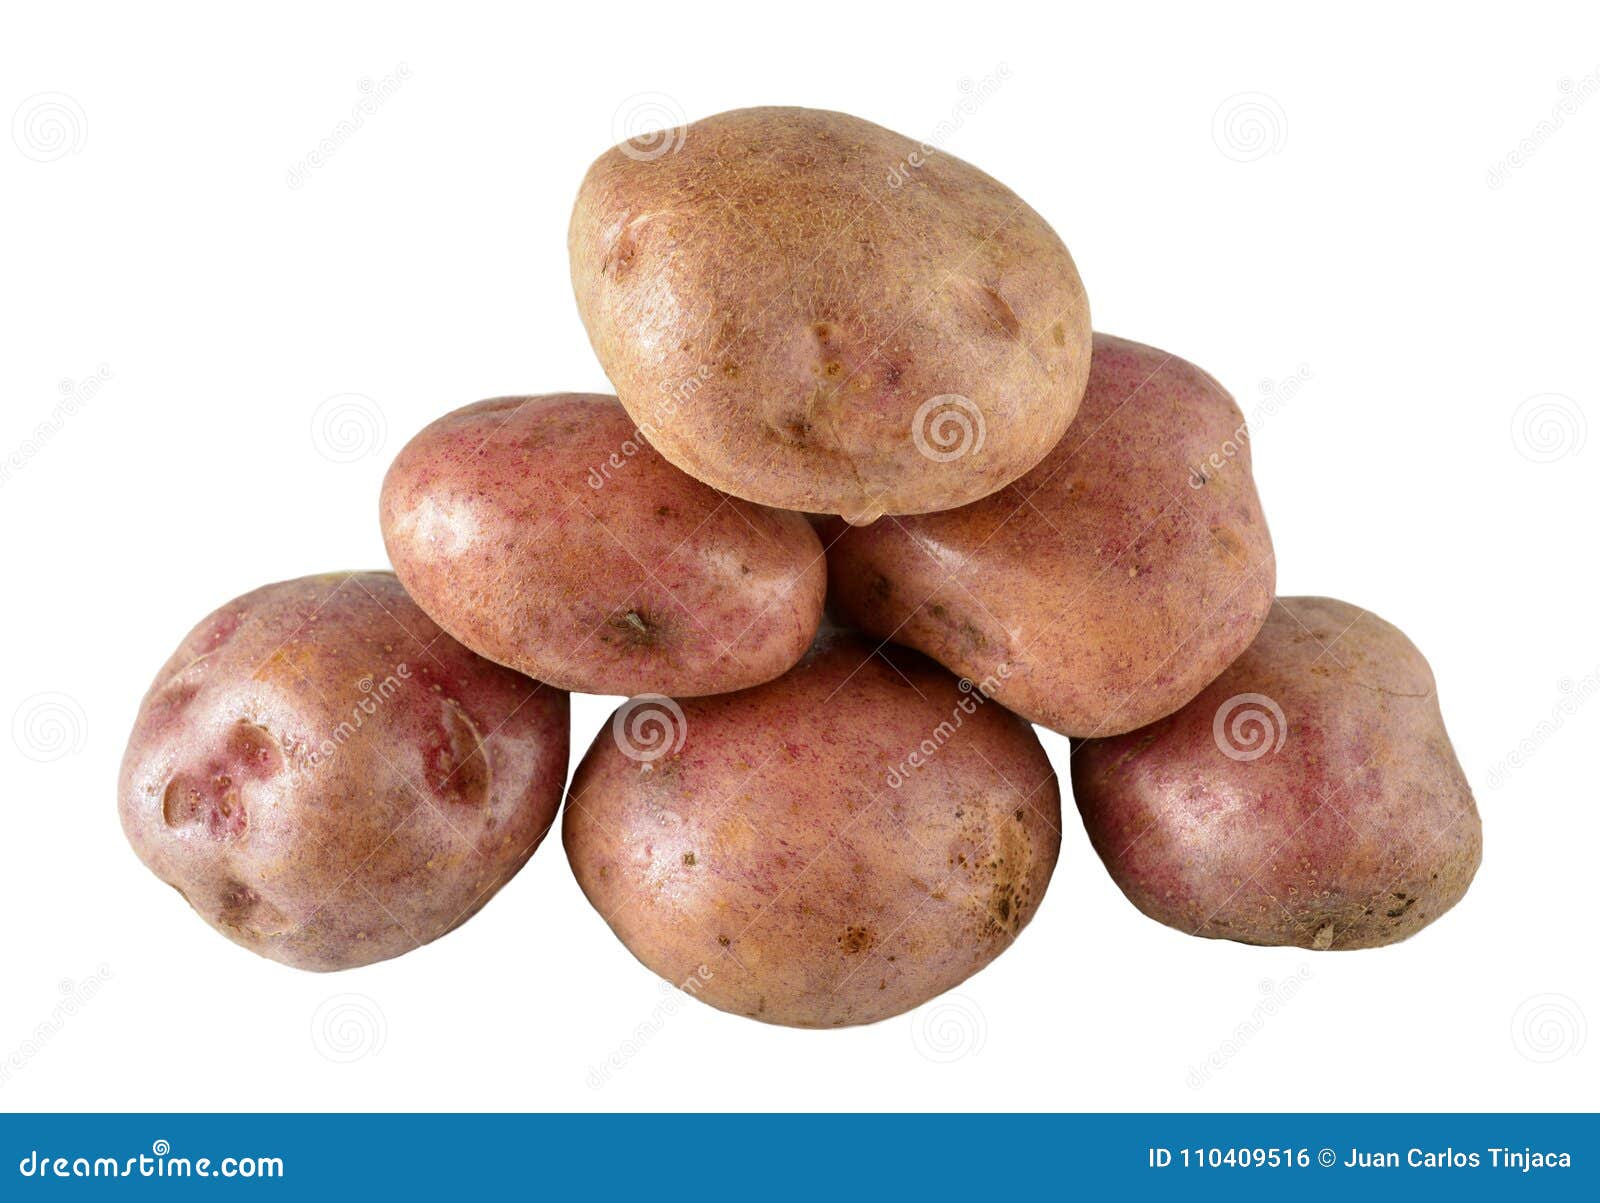 Сорт картофеля Кураж